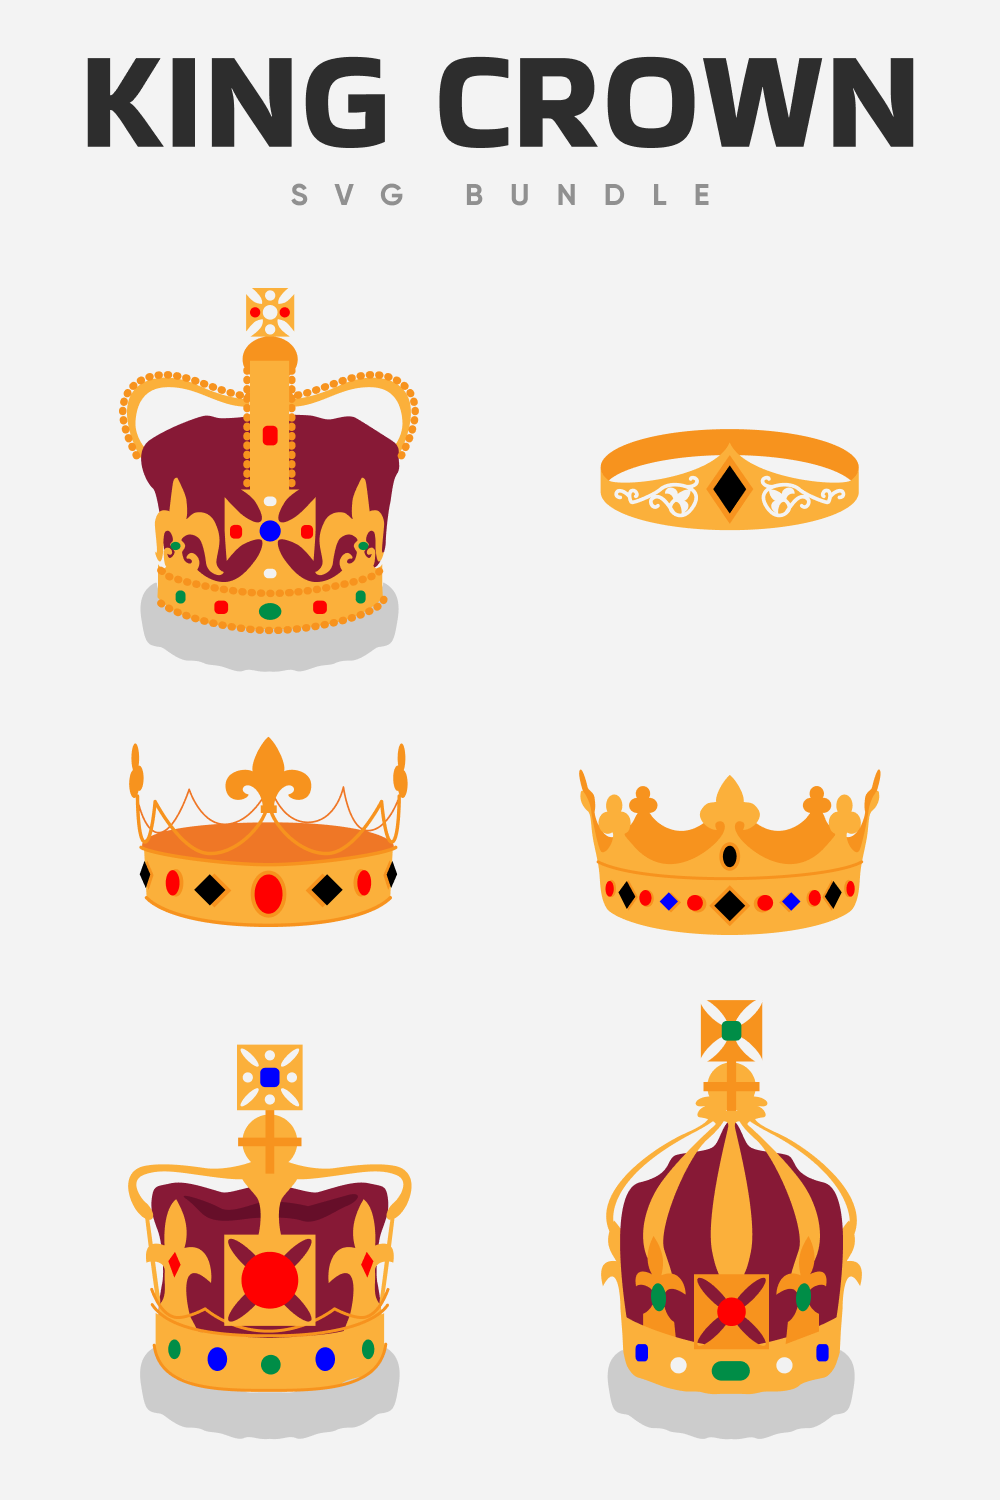 King crown svg bundle.